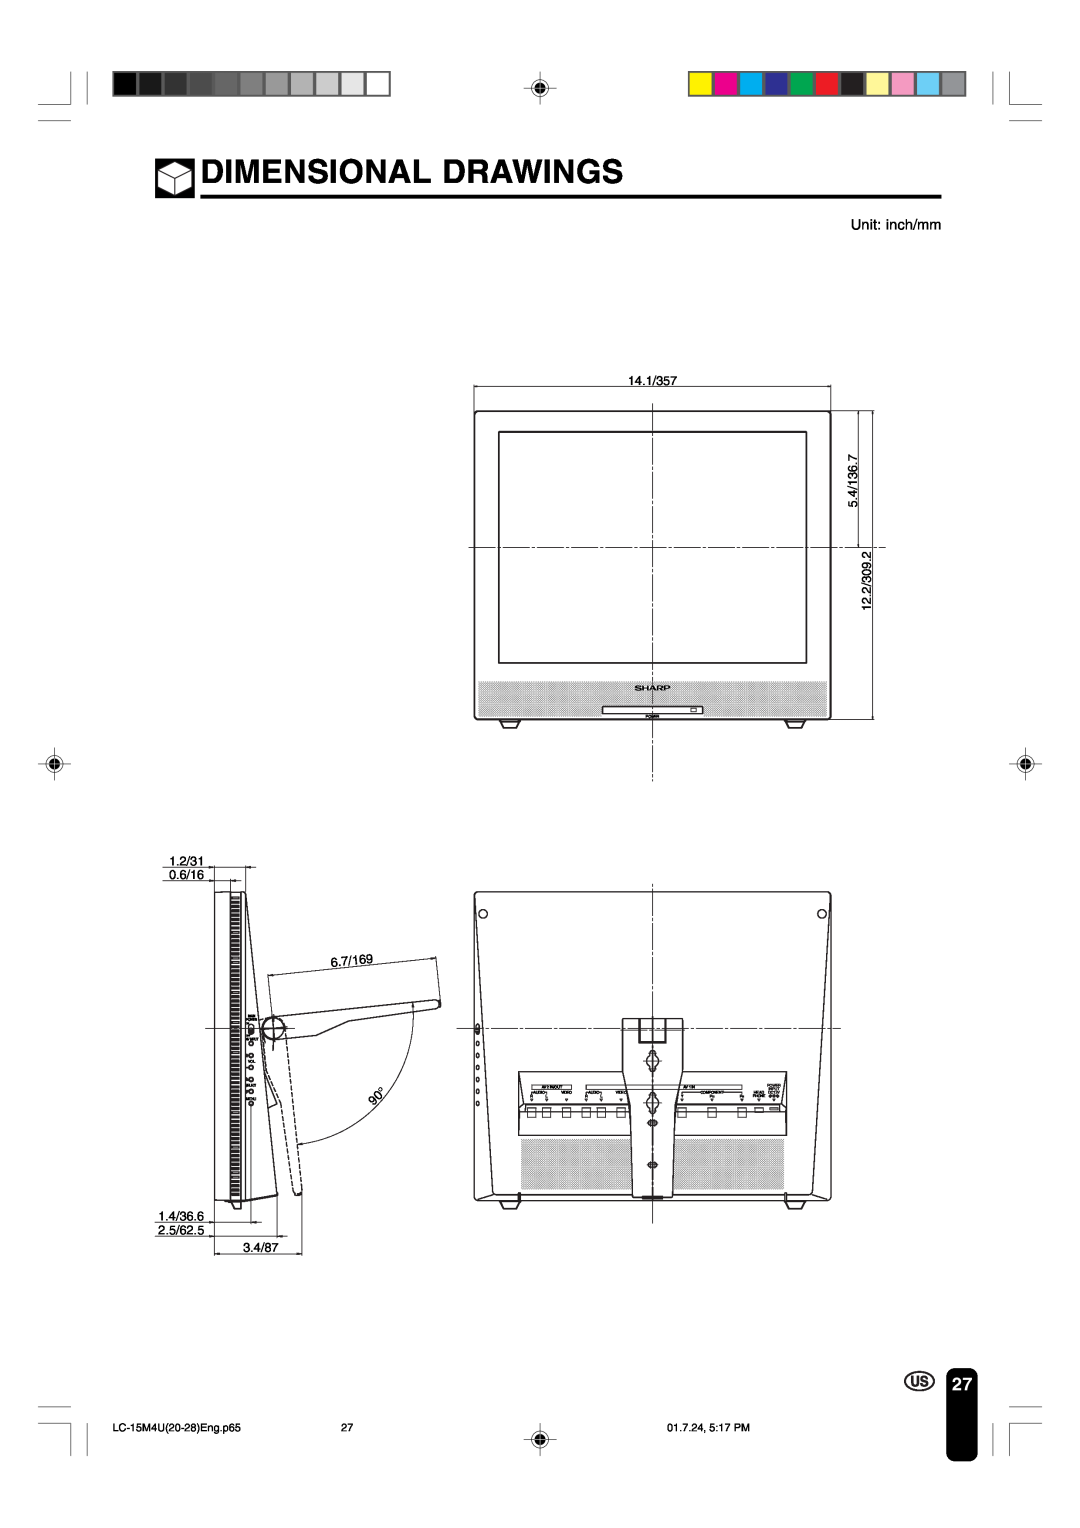 Sharp LC-15M4U operation manual Dimensional Drawings, Unit inch/mm 